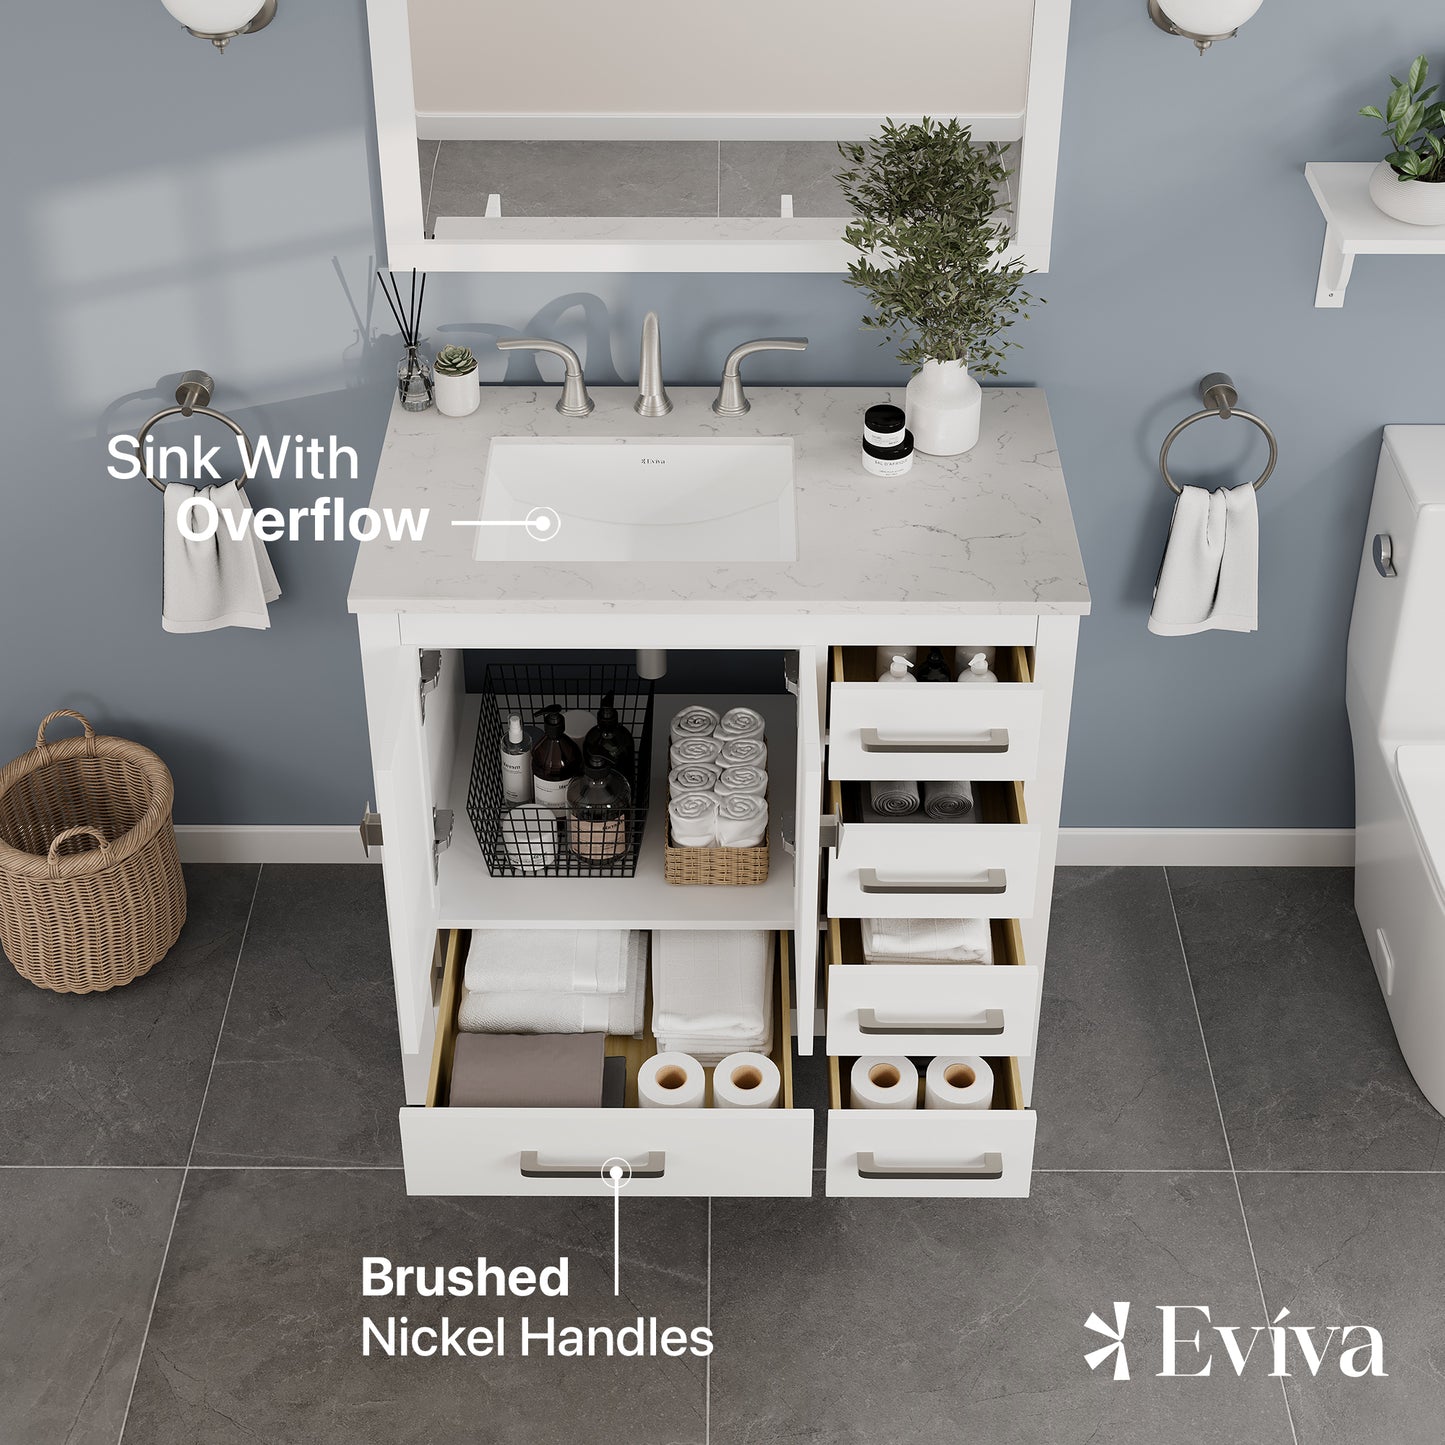 Aberdeen 36"W x 22"D White Bathroom Vanity with Carrara Quartz Countertop and Undermount Porcelain Sink